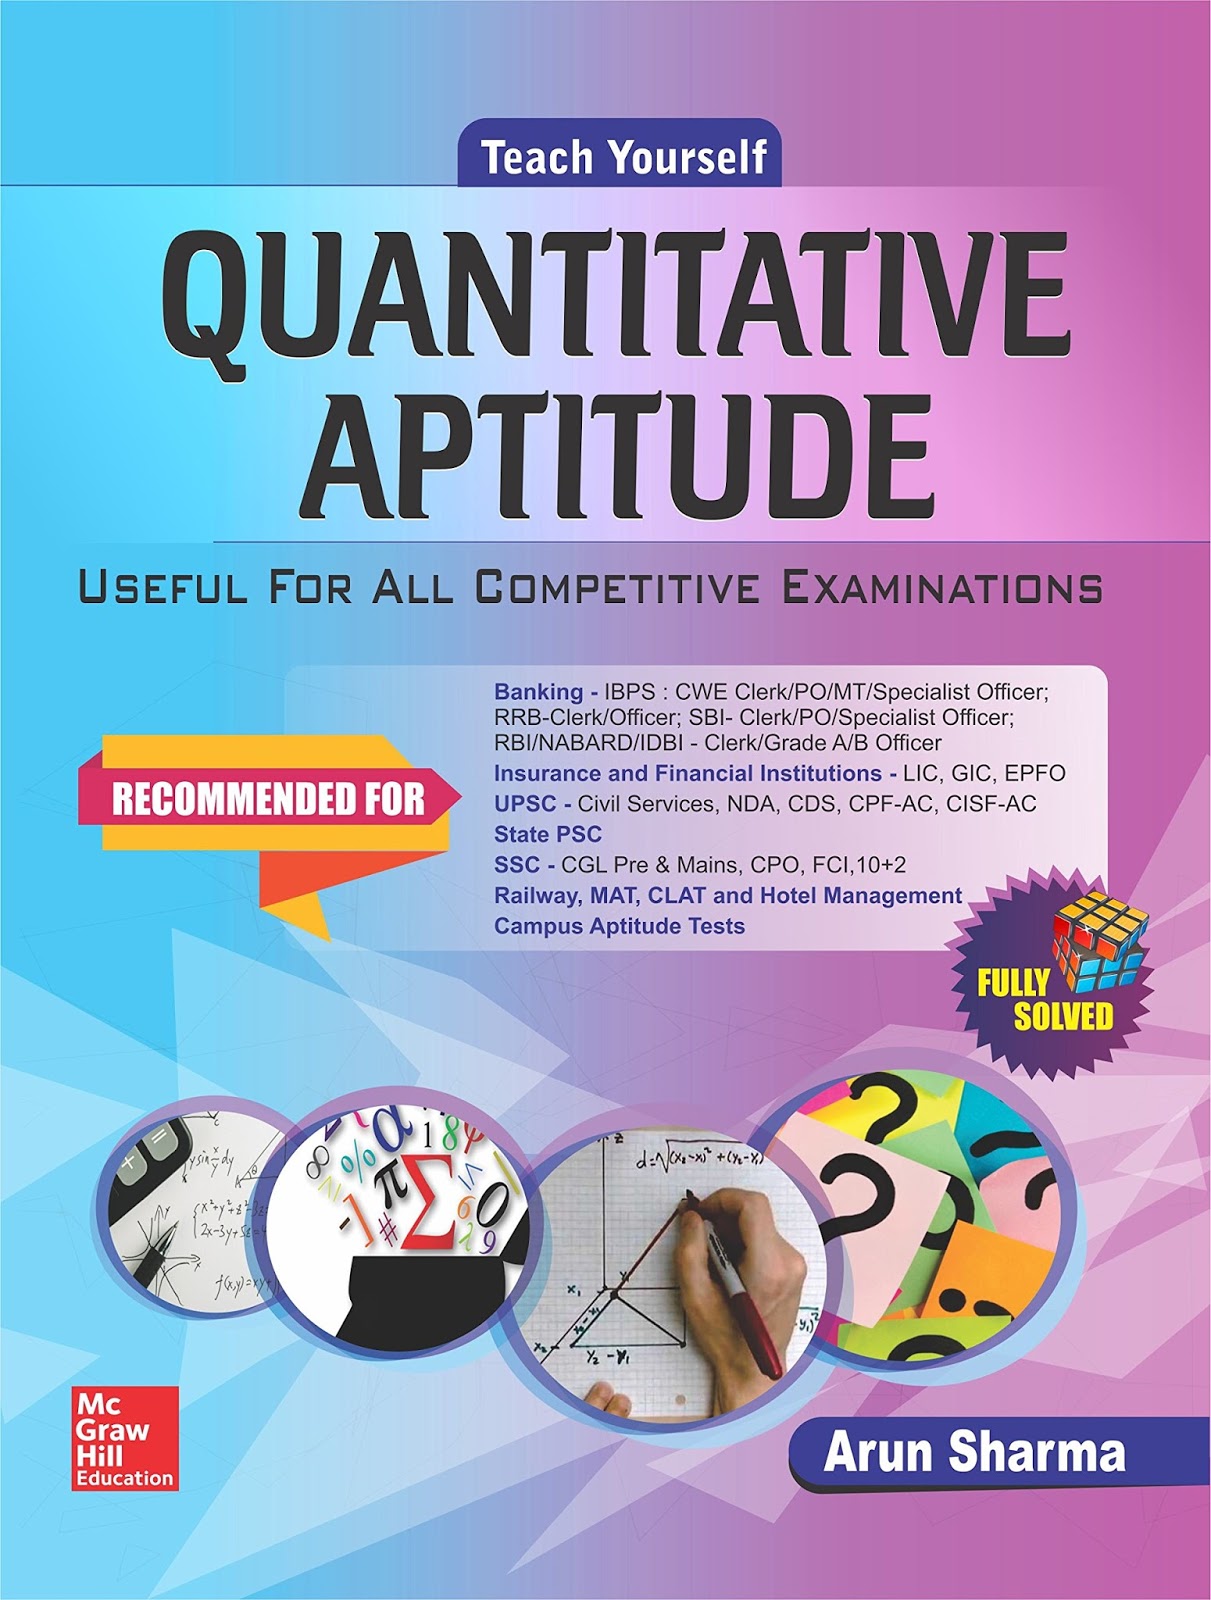 Rs Agarwal Quantitative Aptitude Pdf Free Download 2015 Scribd India